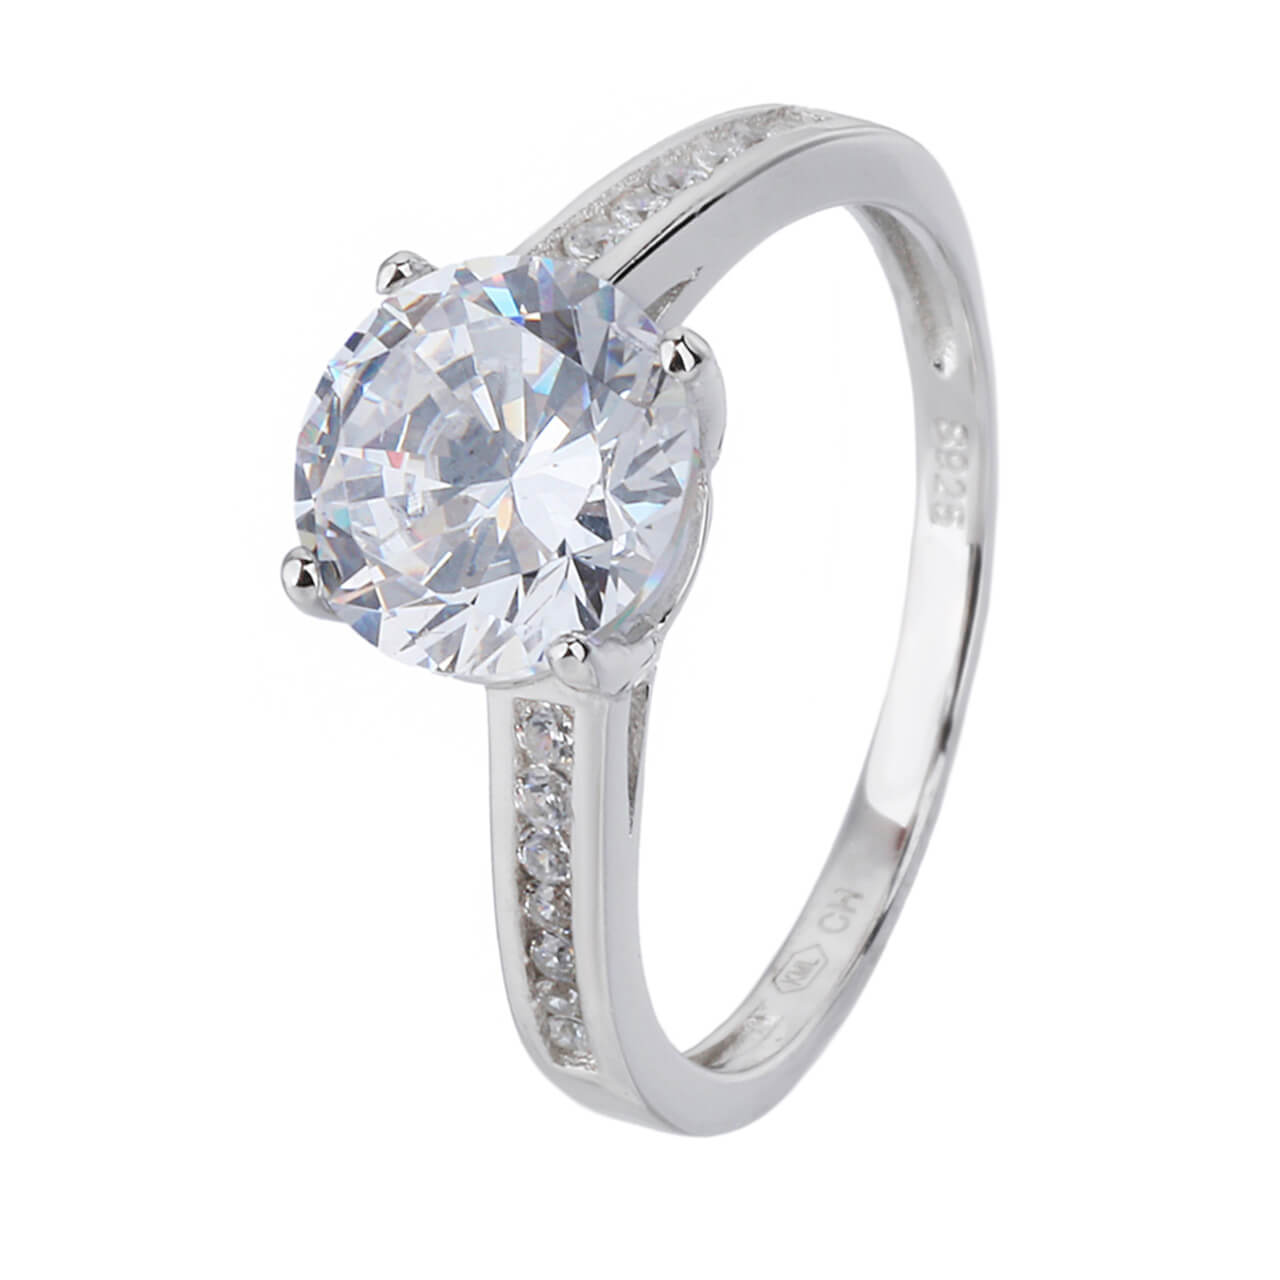 Stříbrný prsten SOLITÉR výrazný Velikost prstenu: 57 Ag 925/1000